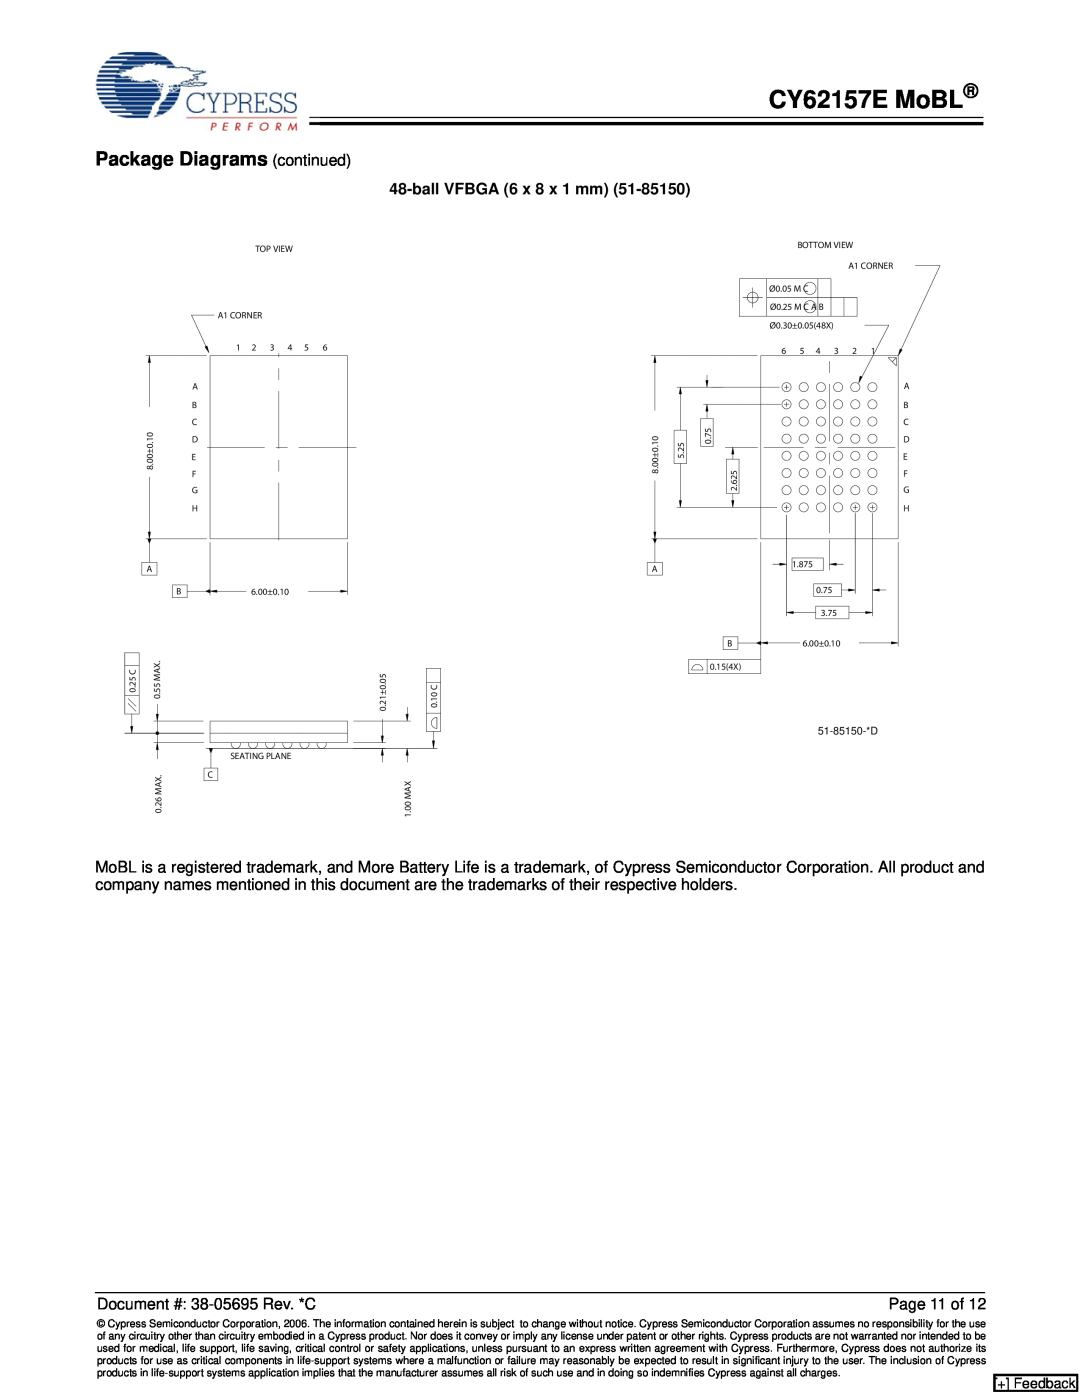 Cypress manual Package Diagrams continued, CY62157E MoBL, ball VFBGA 6 x 8 x 1 mm, + Feedback 